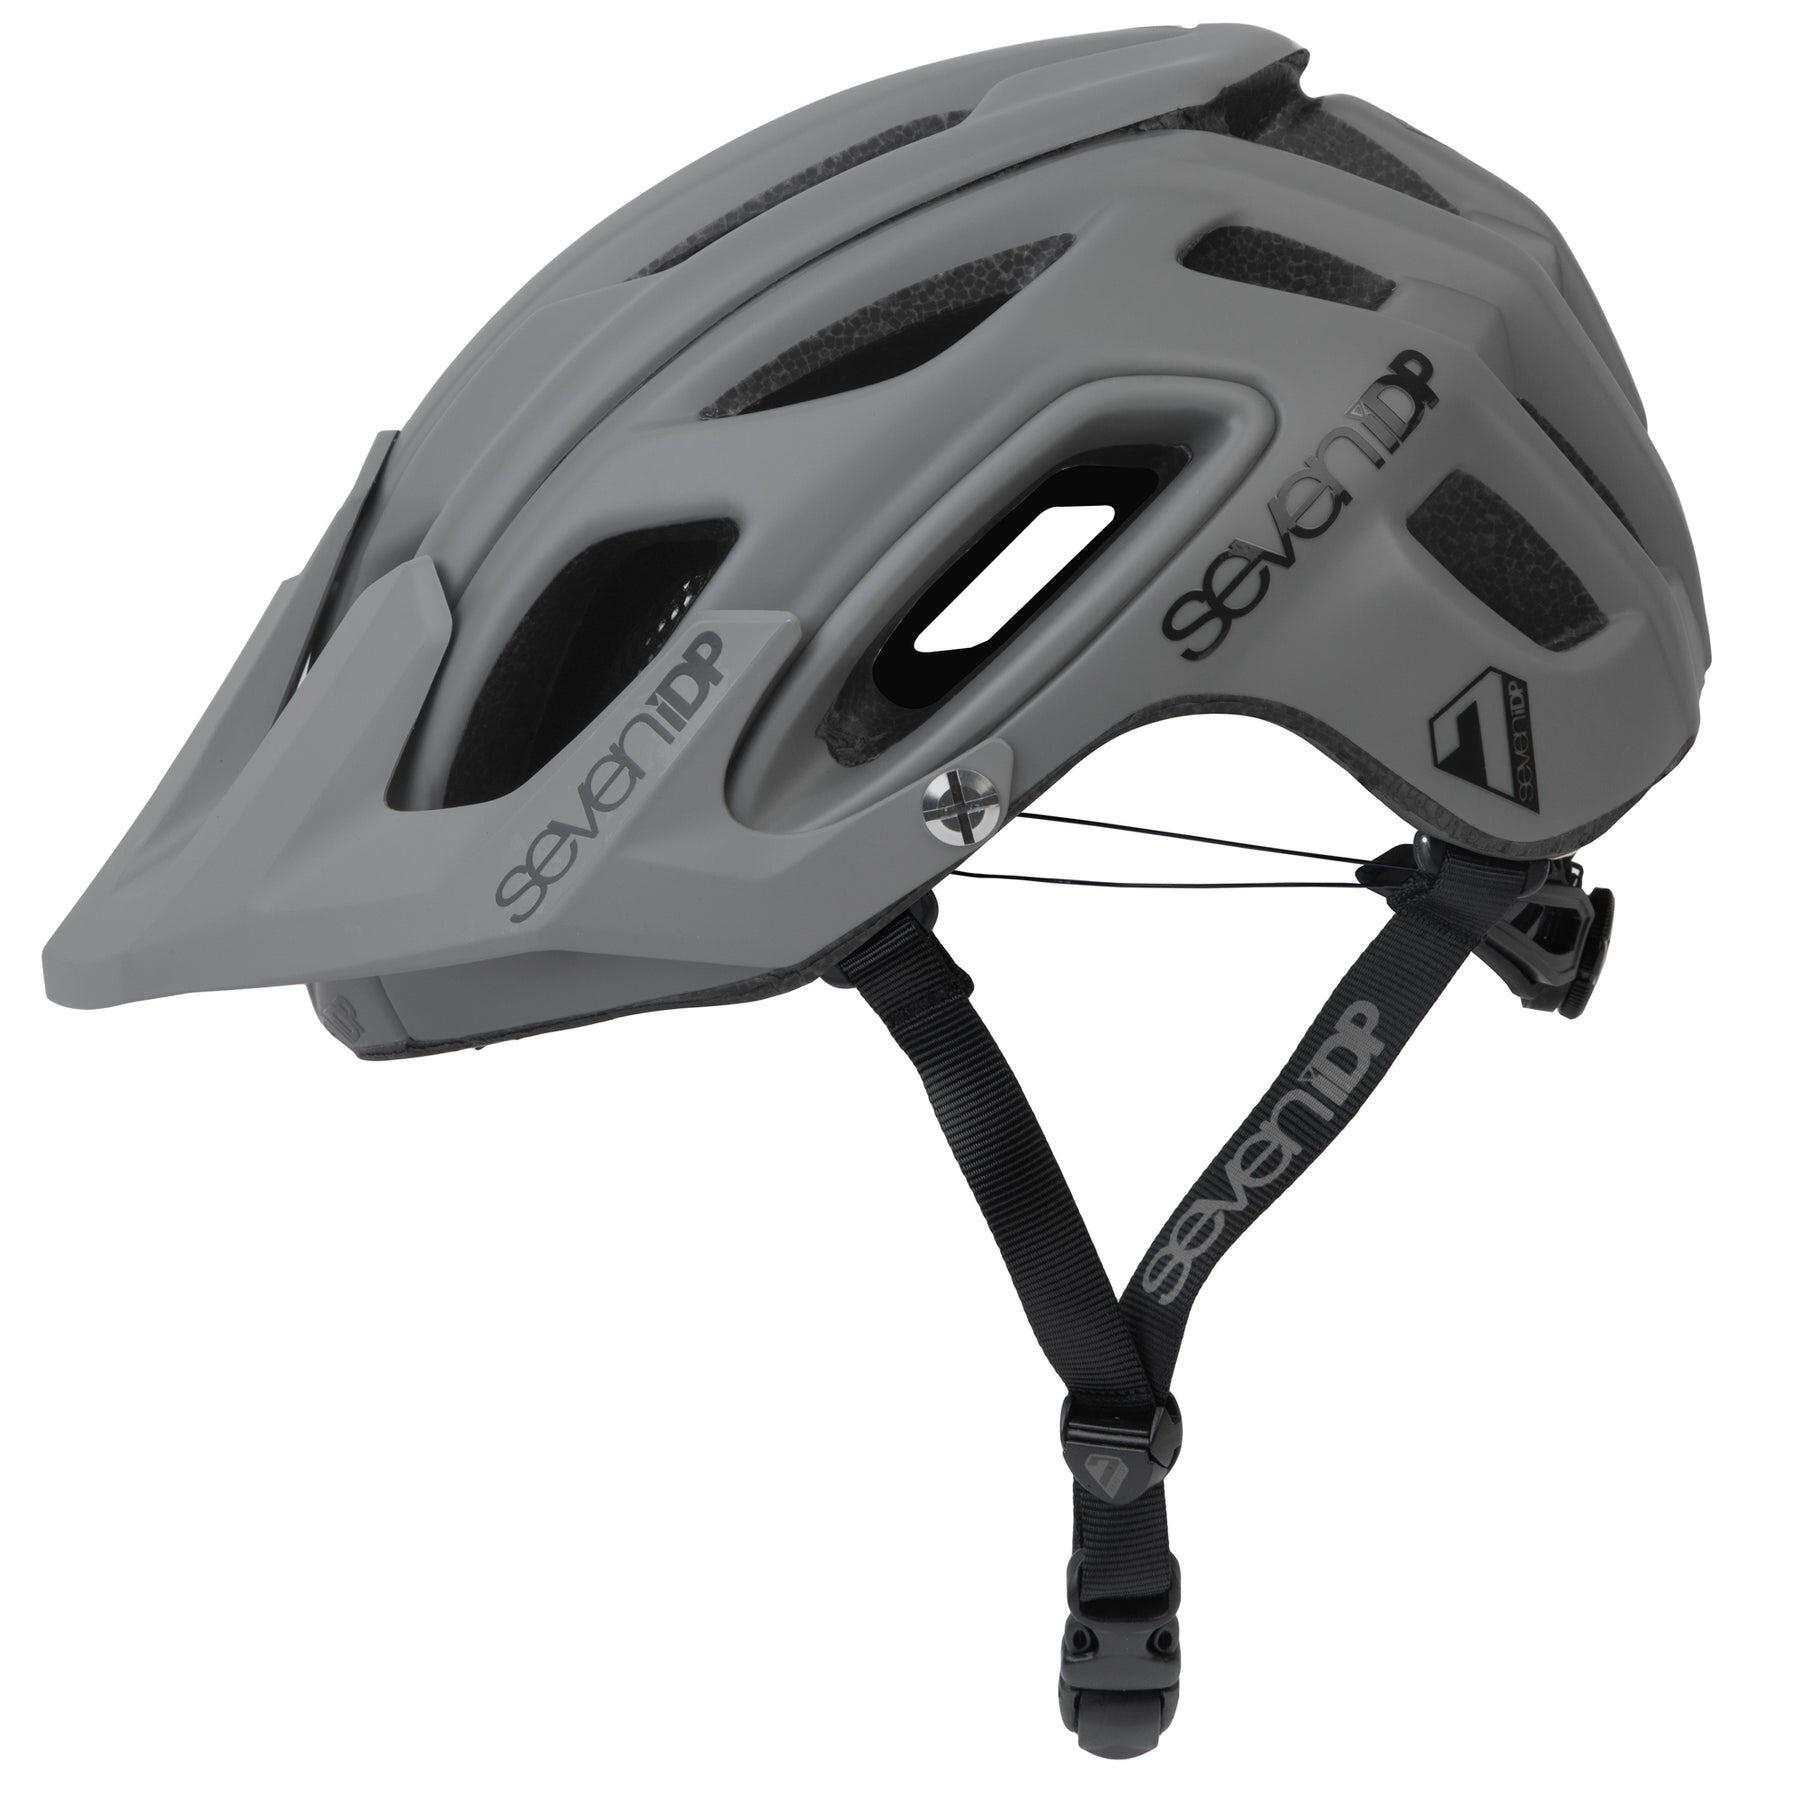 7IDP 7iDP M2 BOA Helmet Grey - XL/2XL 60-63cm